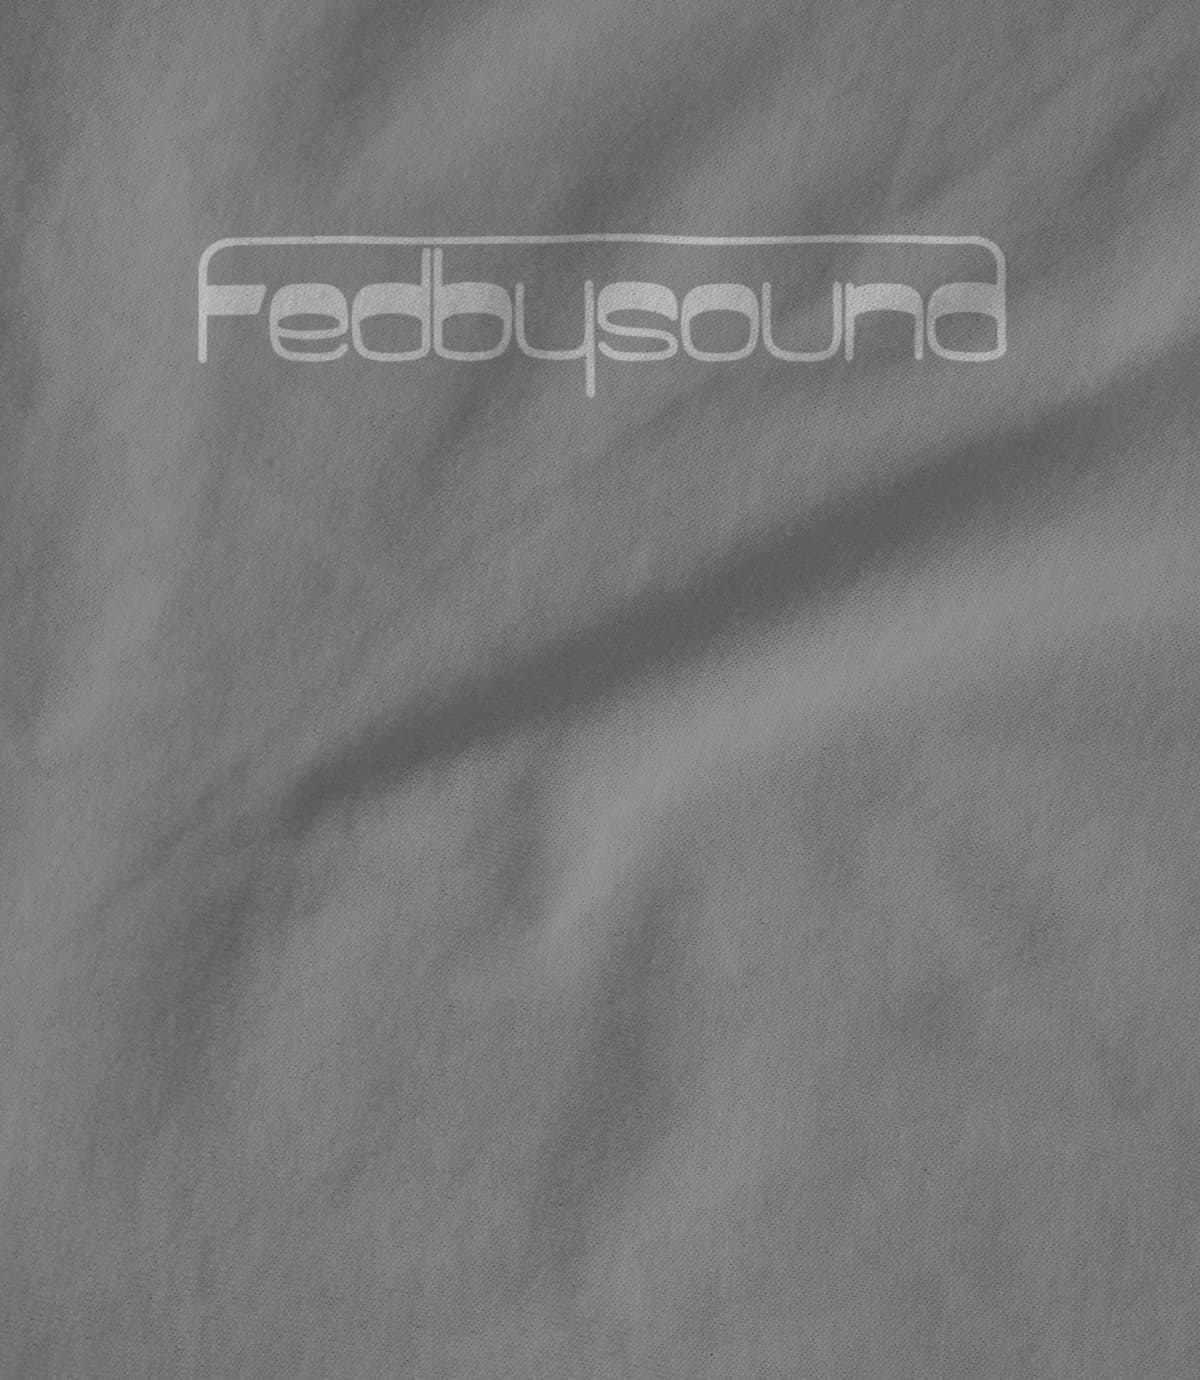 Fedbysound